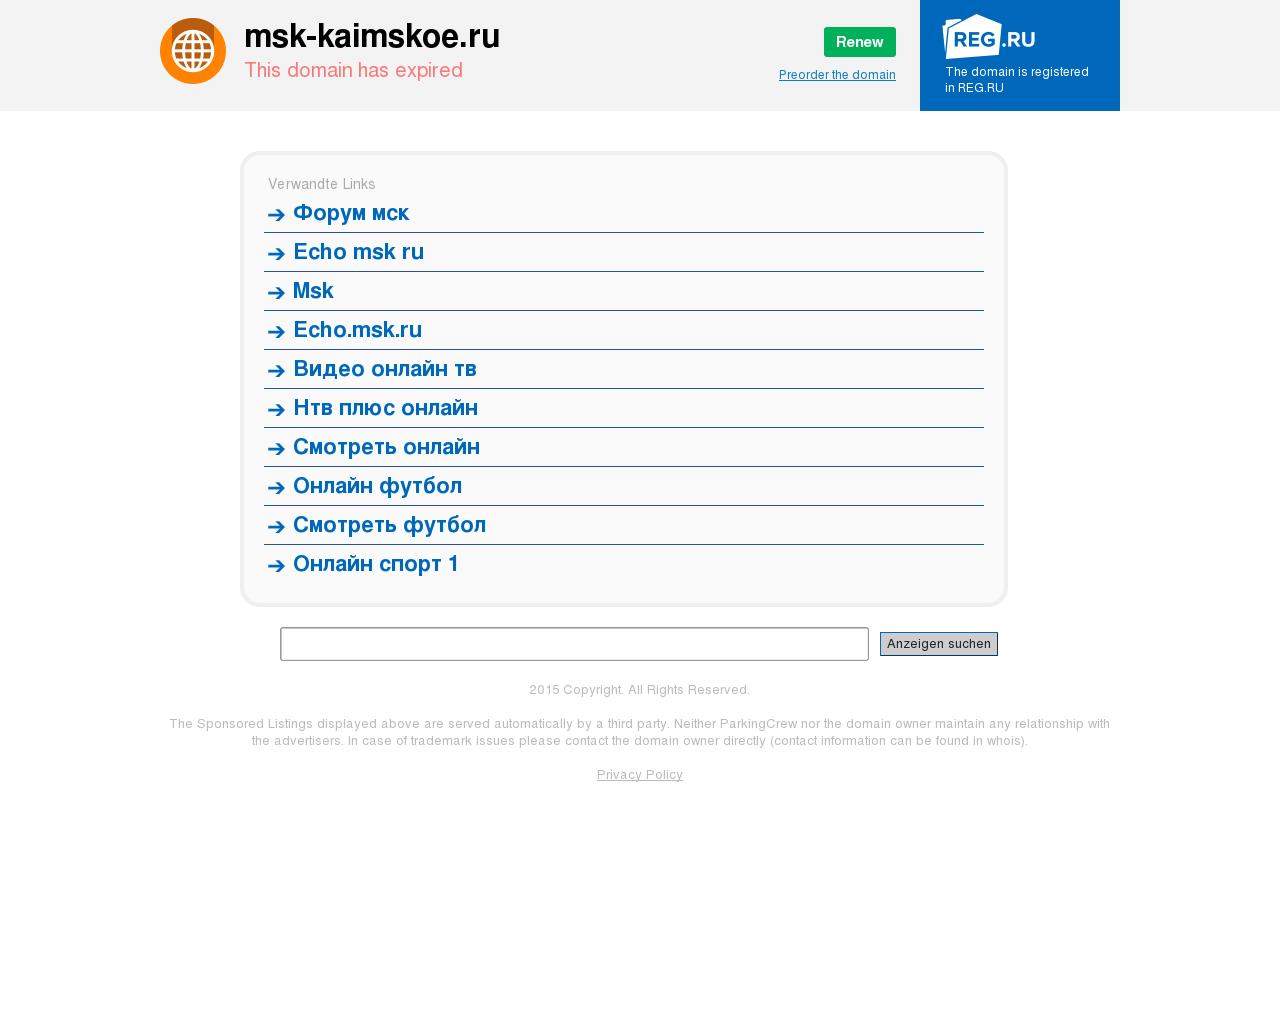 Изображение сайта msk-kaimskoe.ru в разрешении 1280x1024